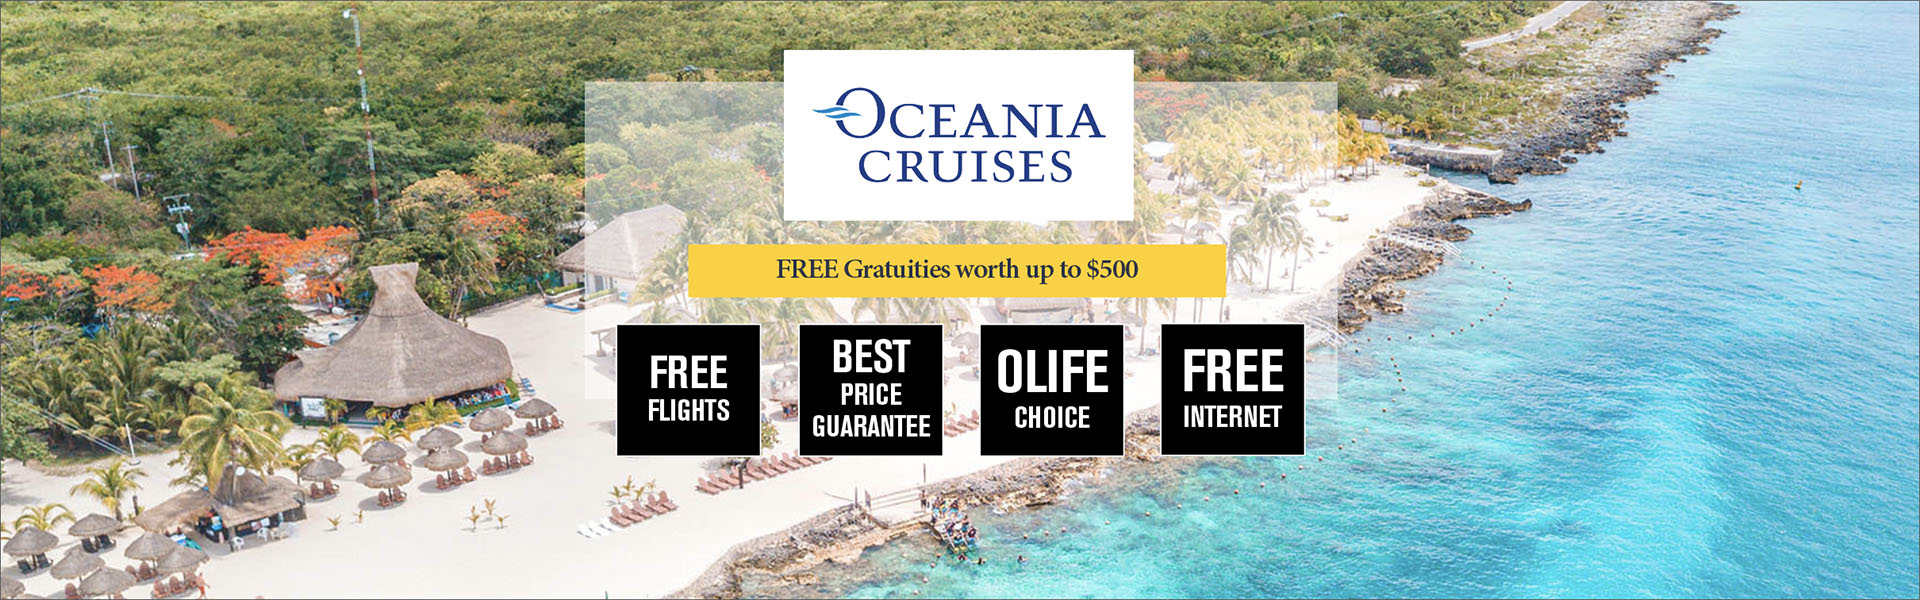 Oceania Cruises - Black Friday Deals